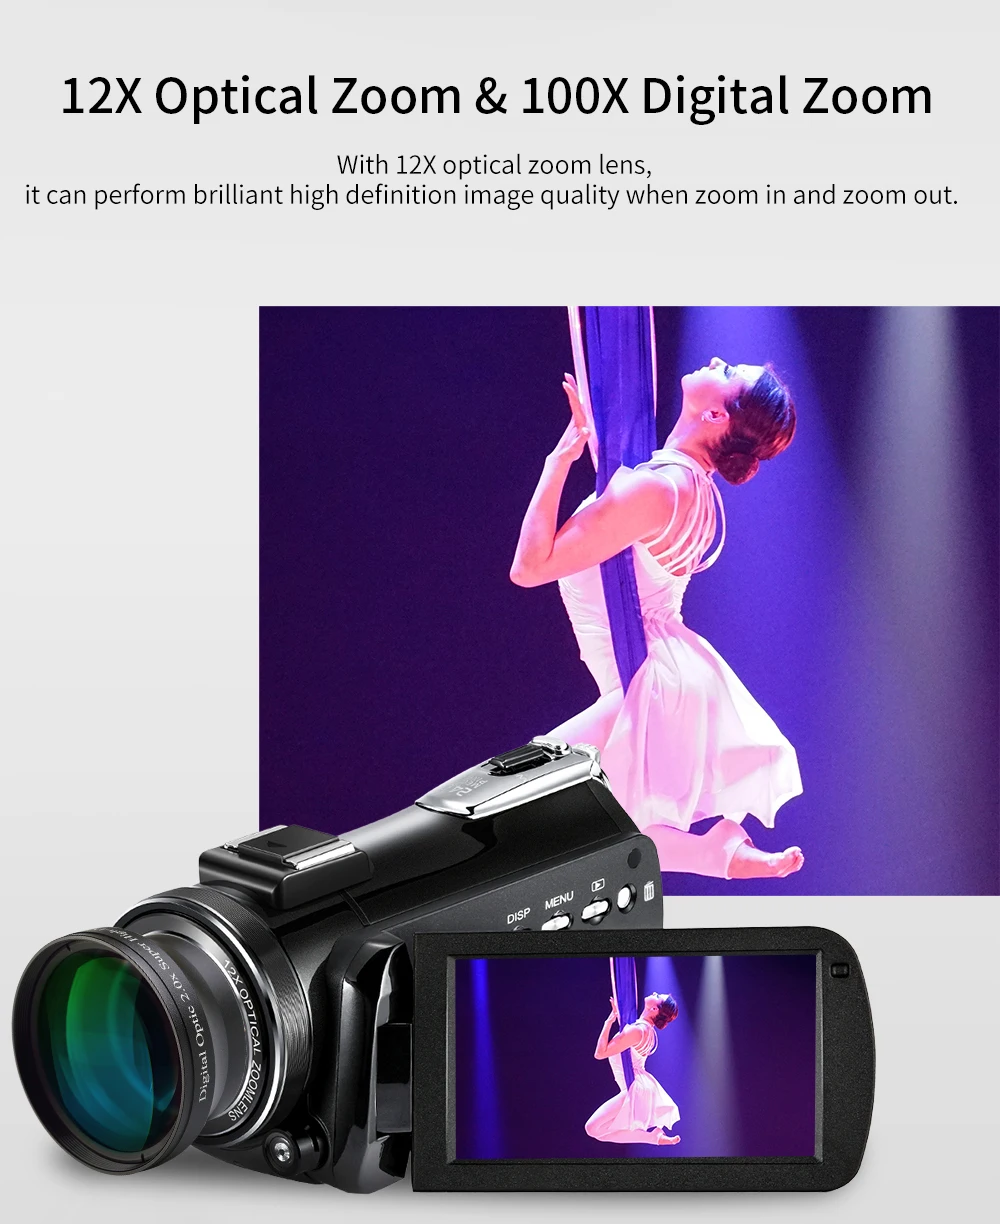 Professional 4K video camera optical zoom camcorder living stream camera AC5